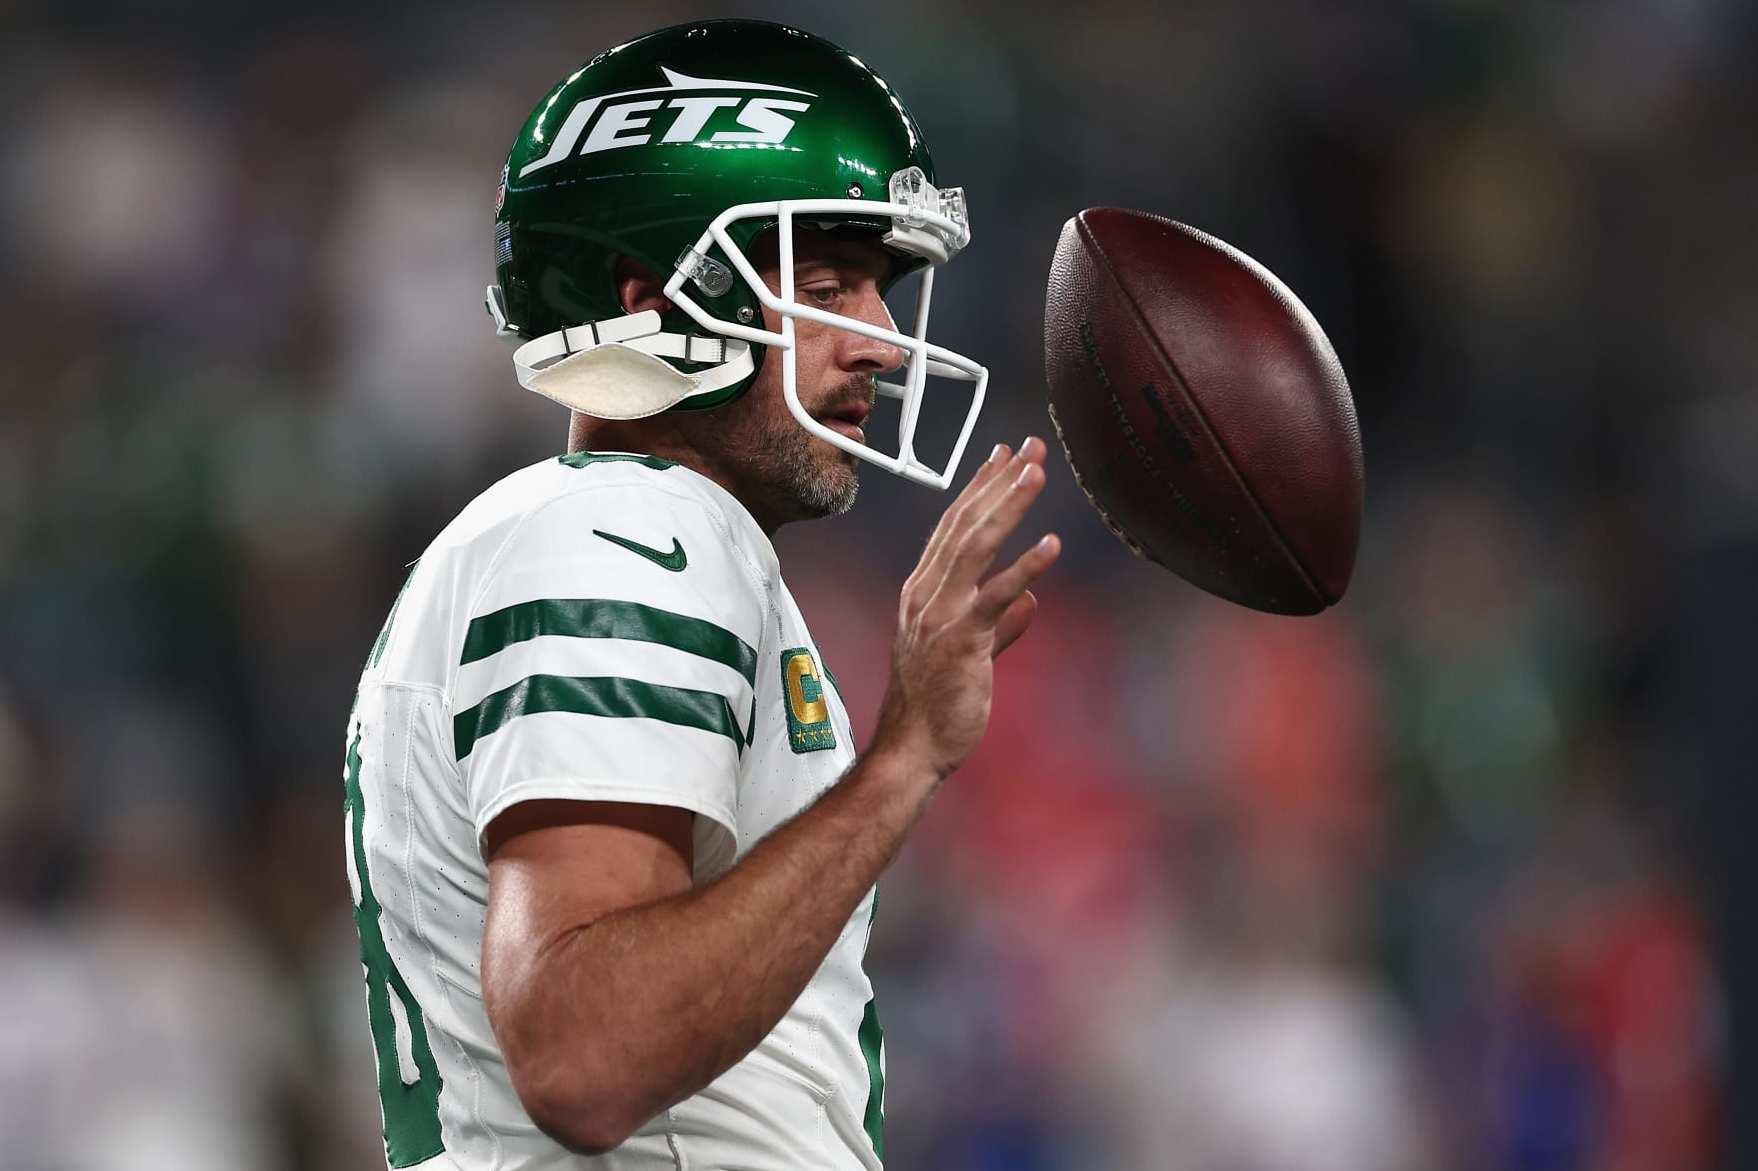 Monday Night Football highlights: Aaron Rodgers hurt, Jets win in OT